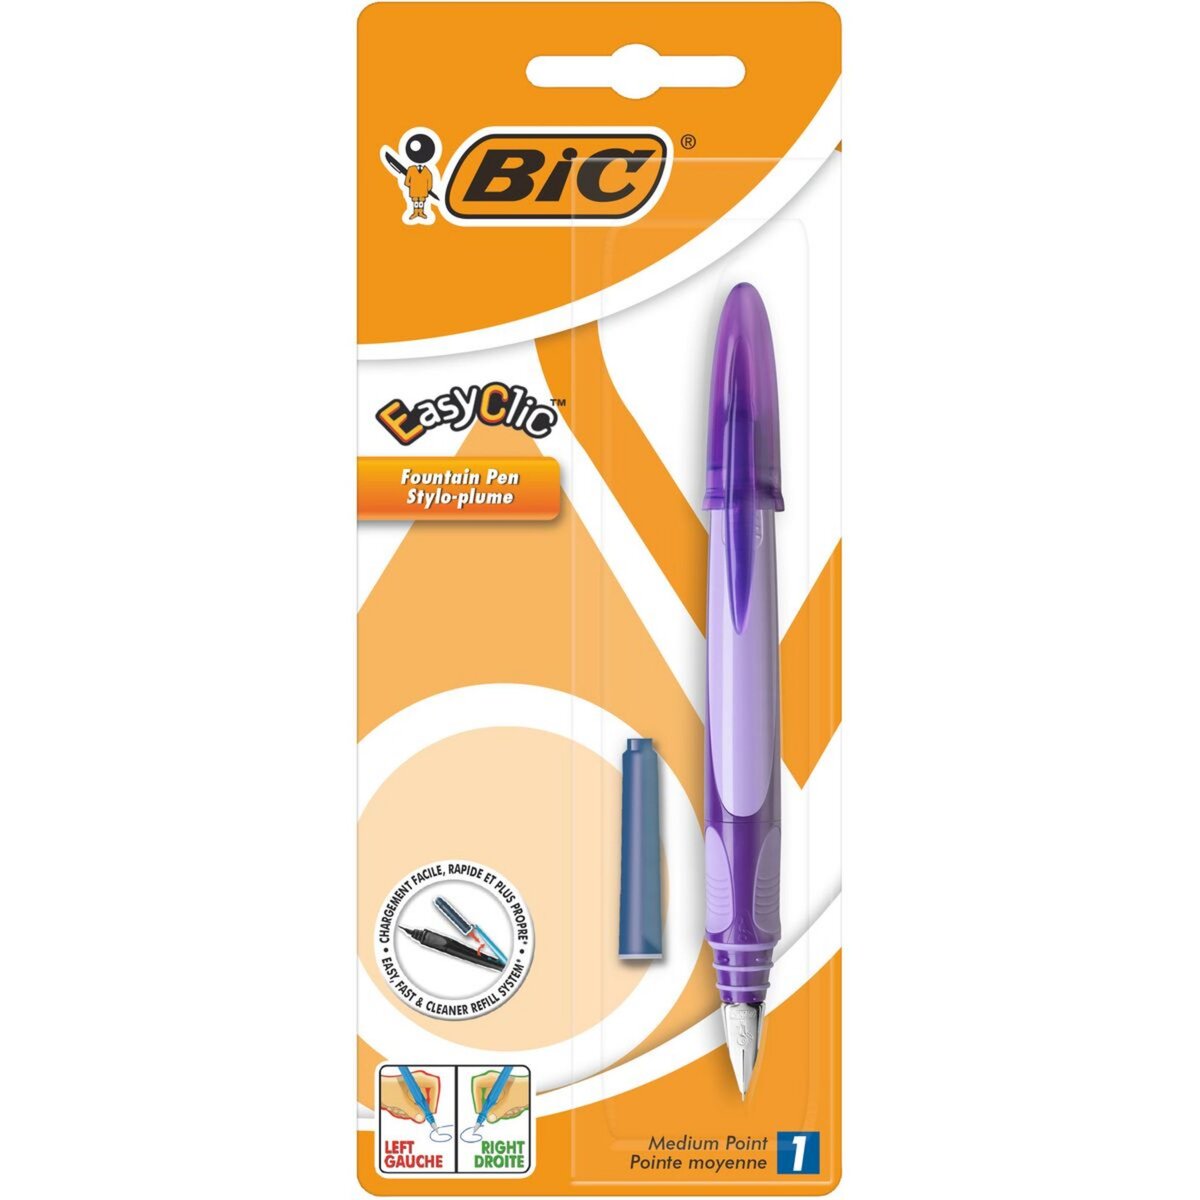 BIC Stylo plume pointe moyenne rechargeable EasyClic violet + 1 petite cartouche d'encre